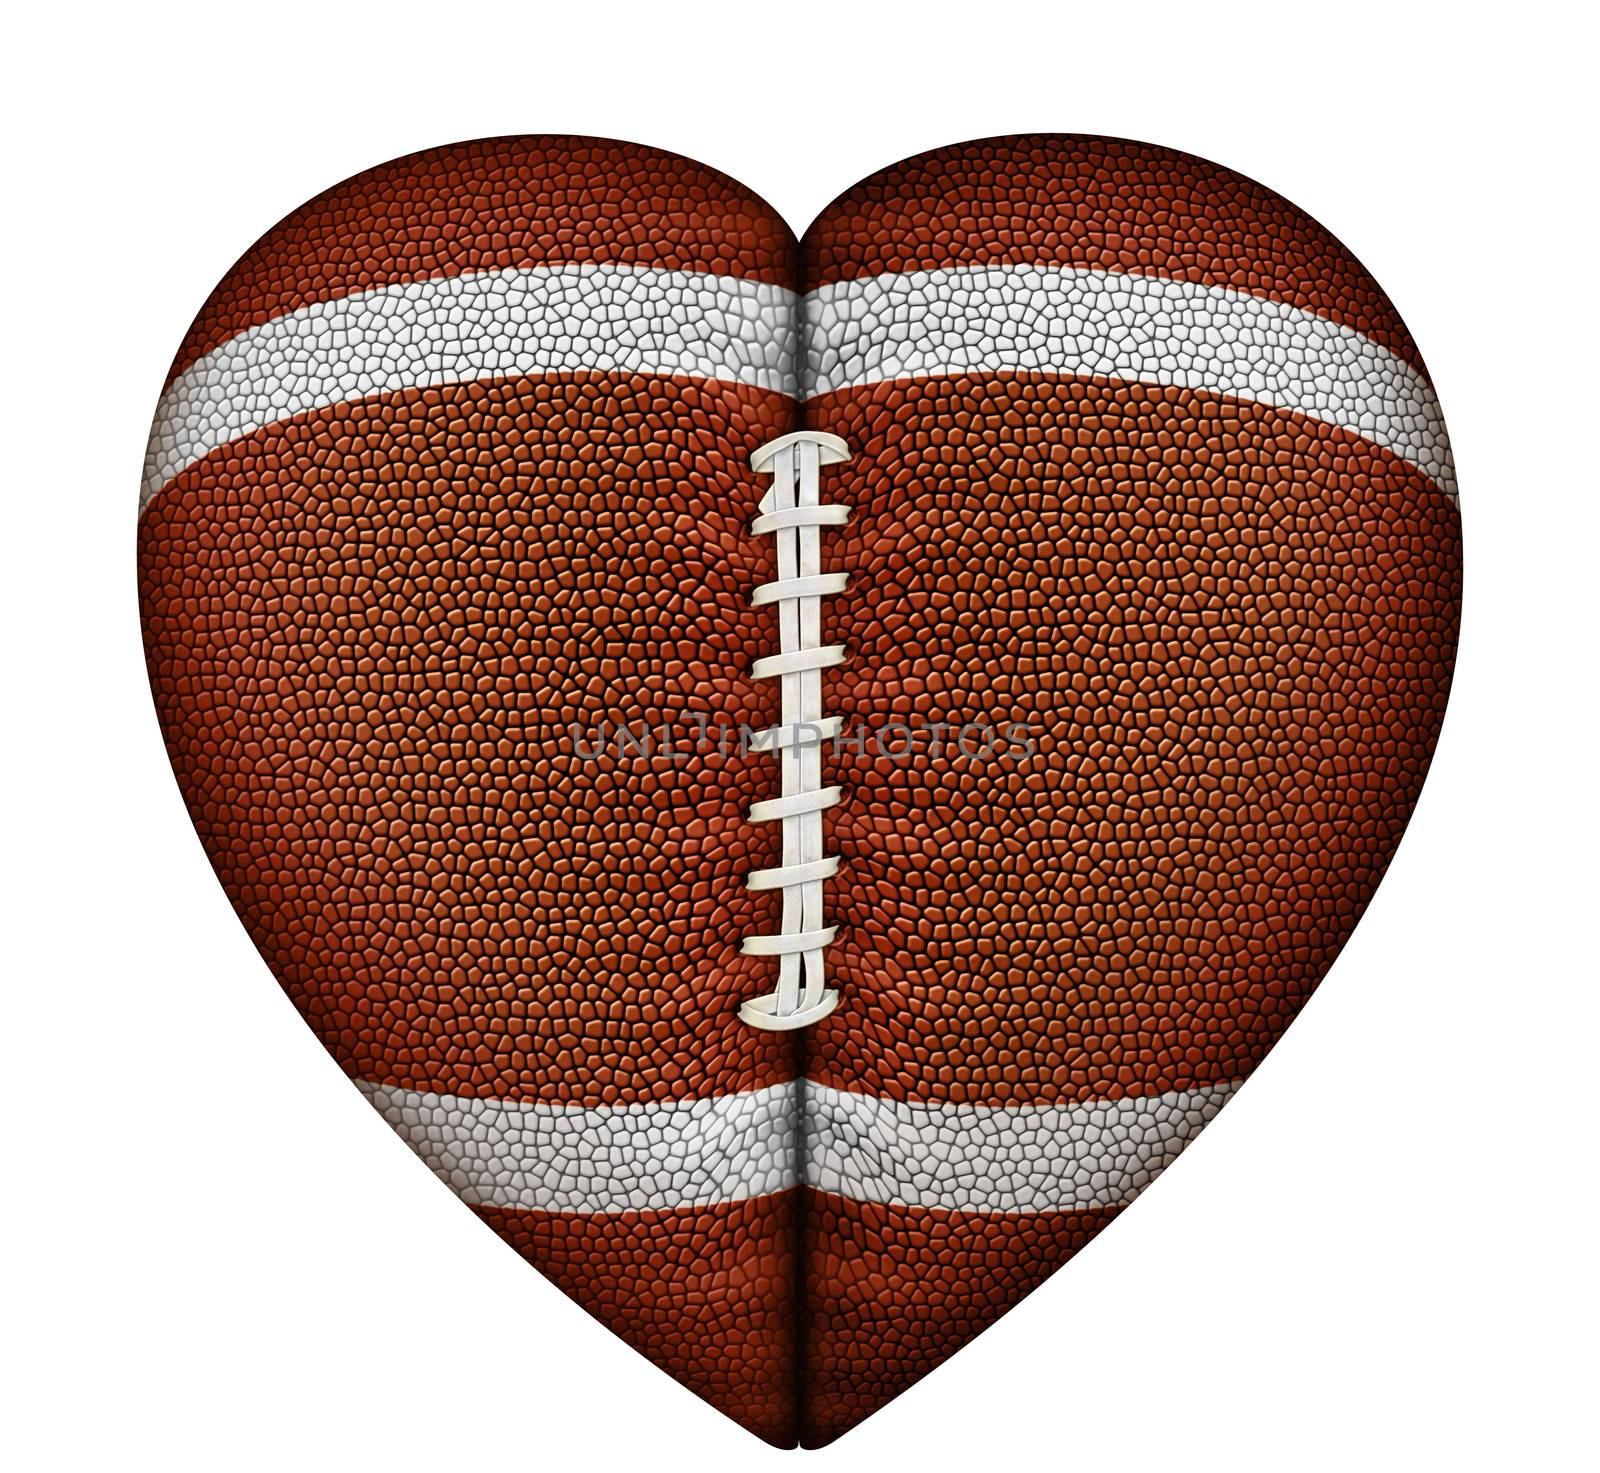 Digital illustration of a heart-shaped football.